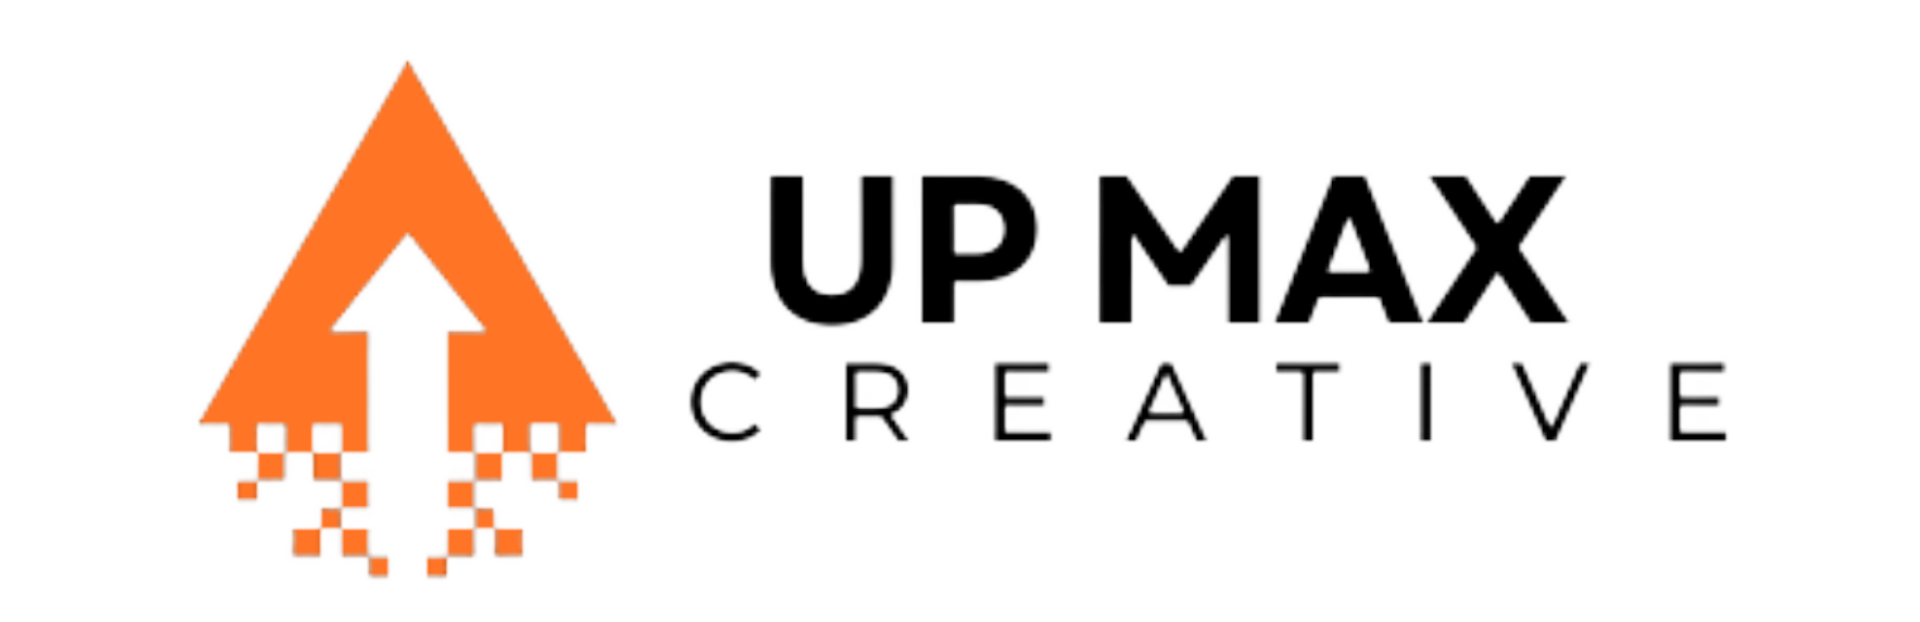 Upmax Creative